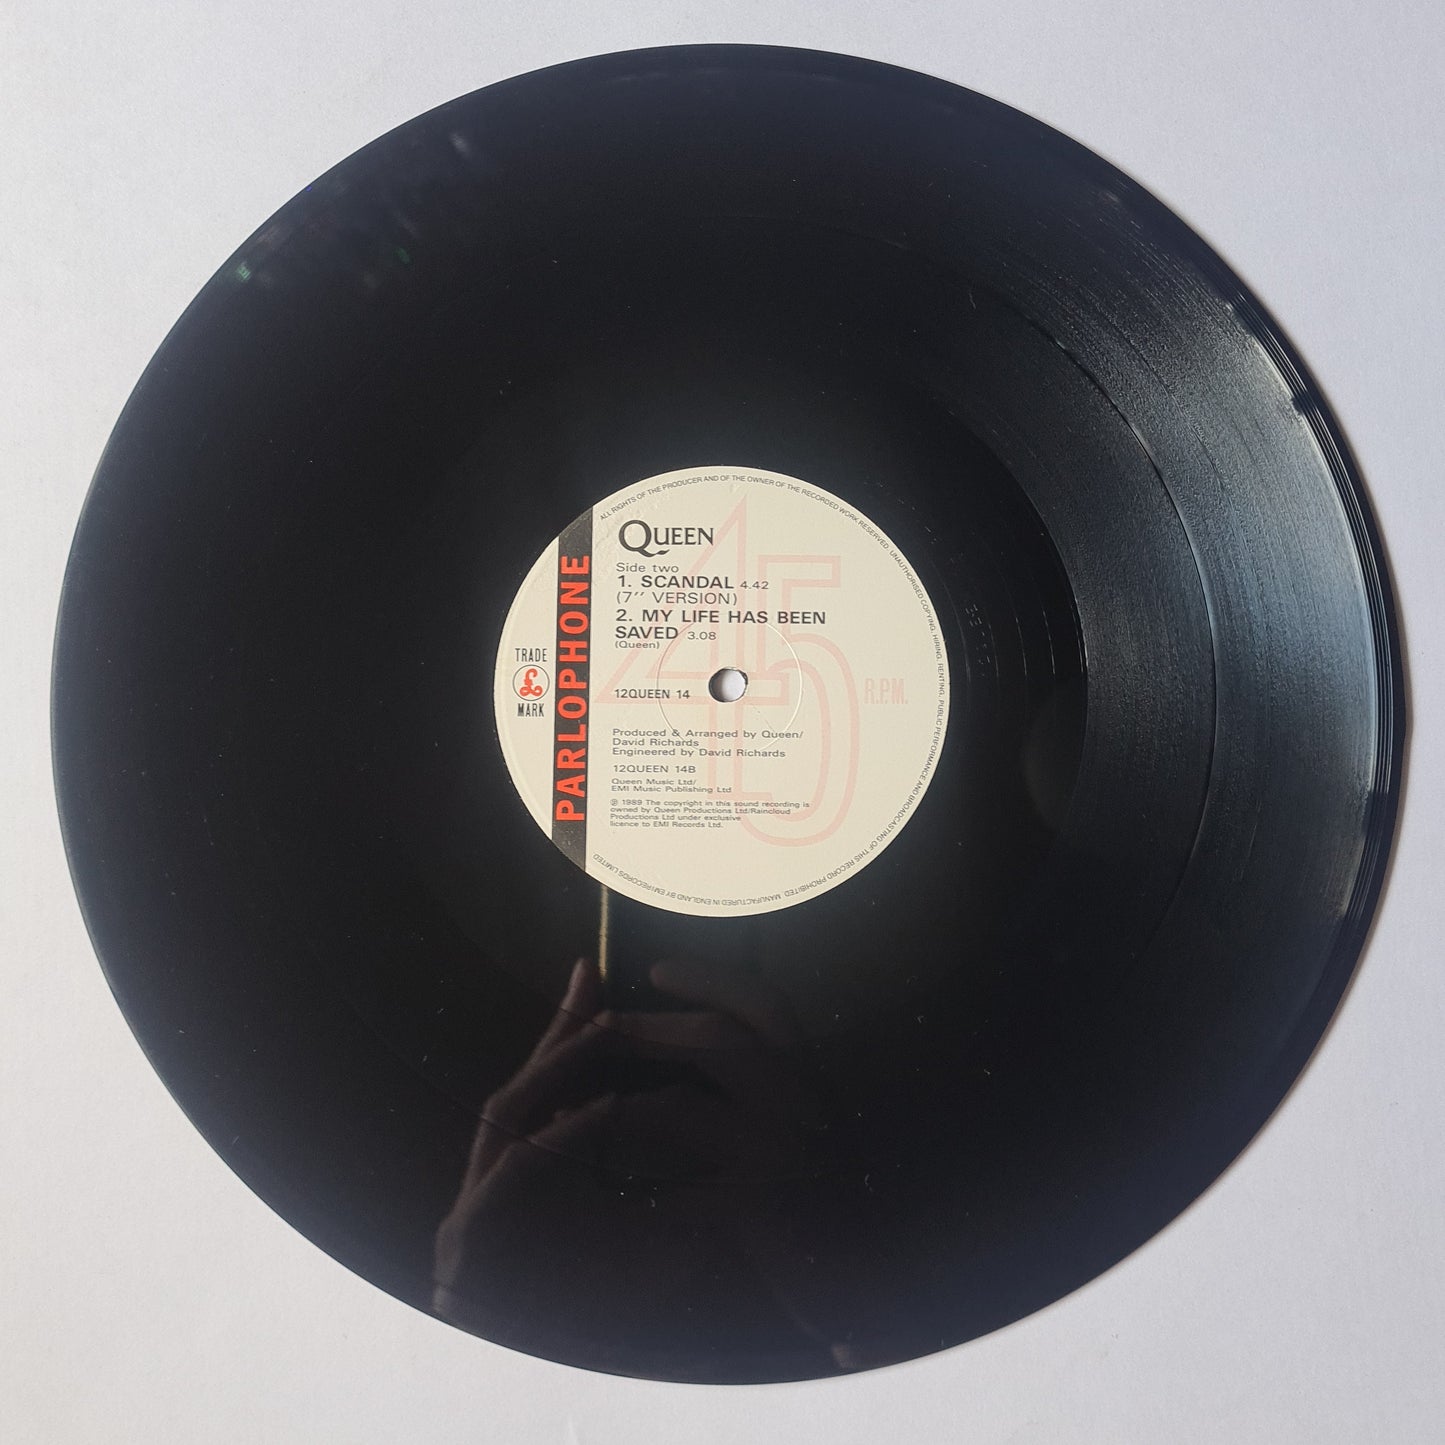 Queen – Scandal (12inch Maxi Single) - 1989